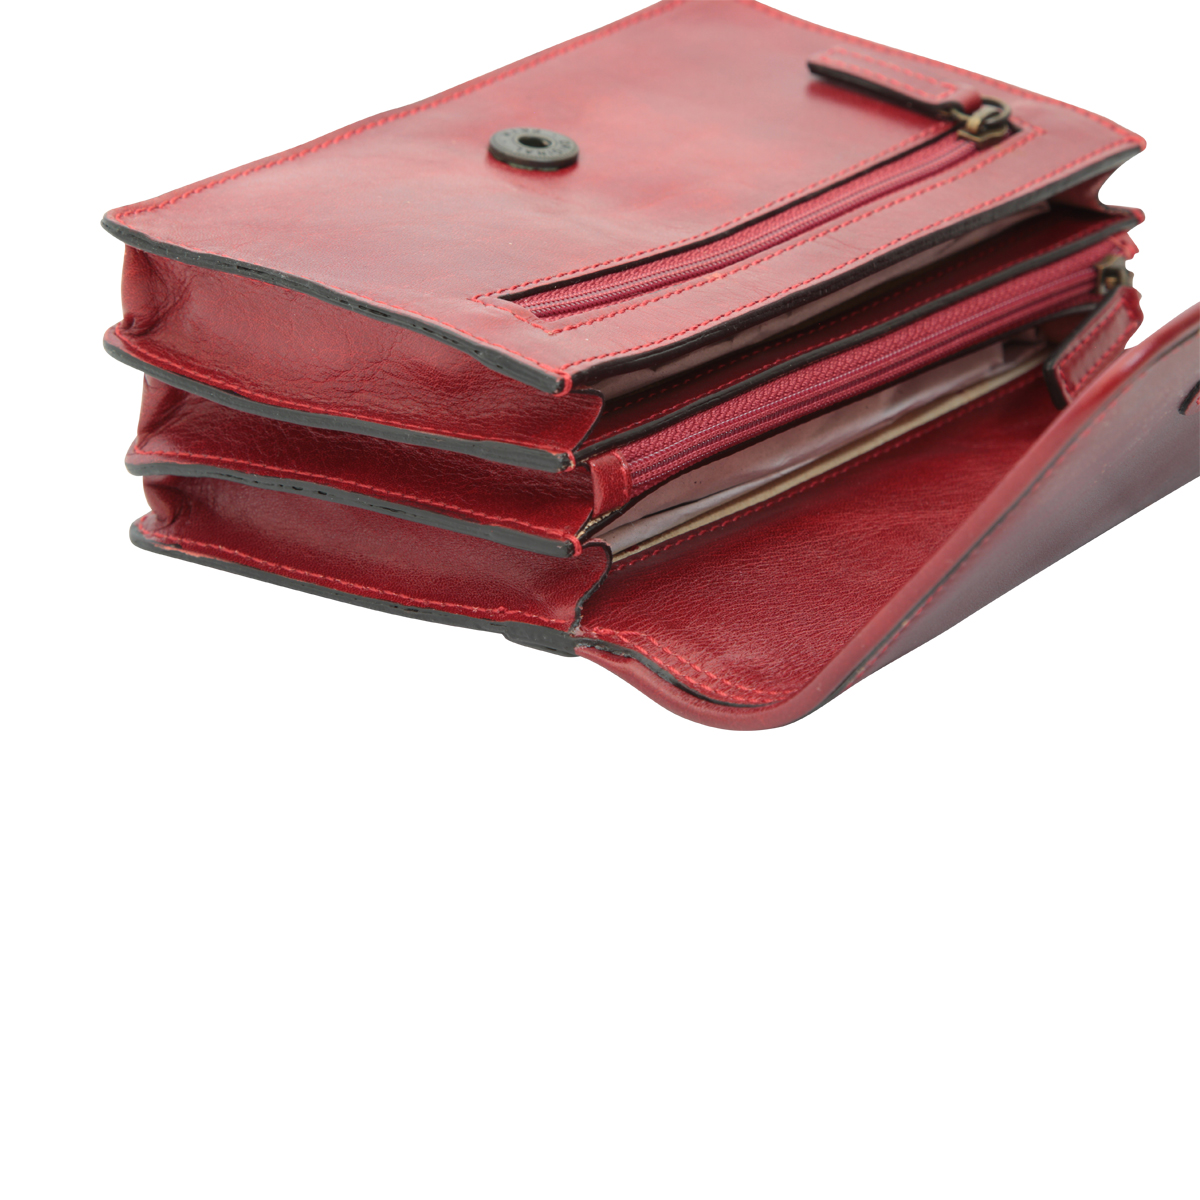 Leather pochette - red | 407989RO UK | Old Angler Firenze